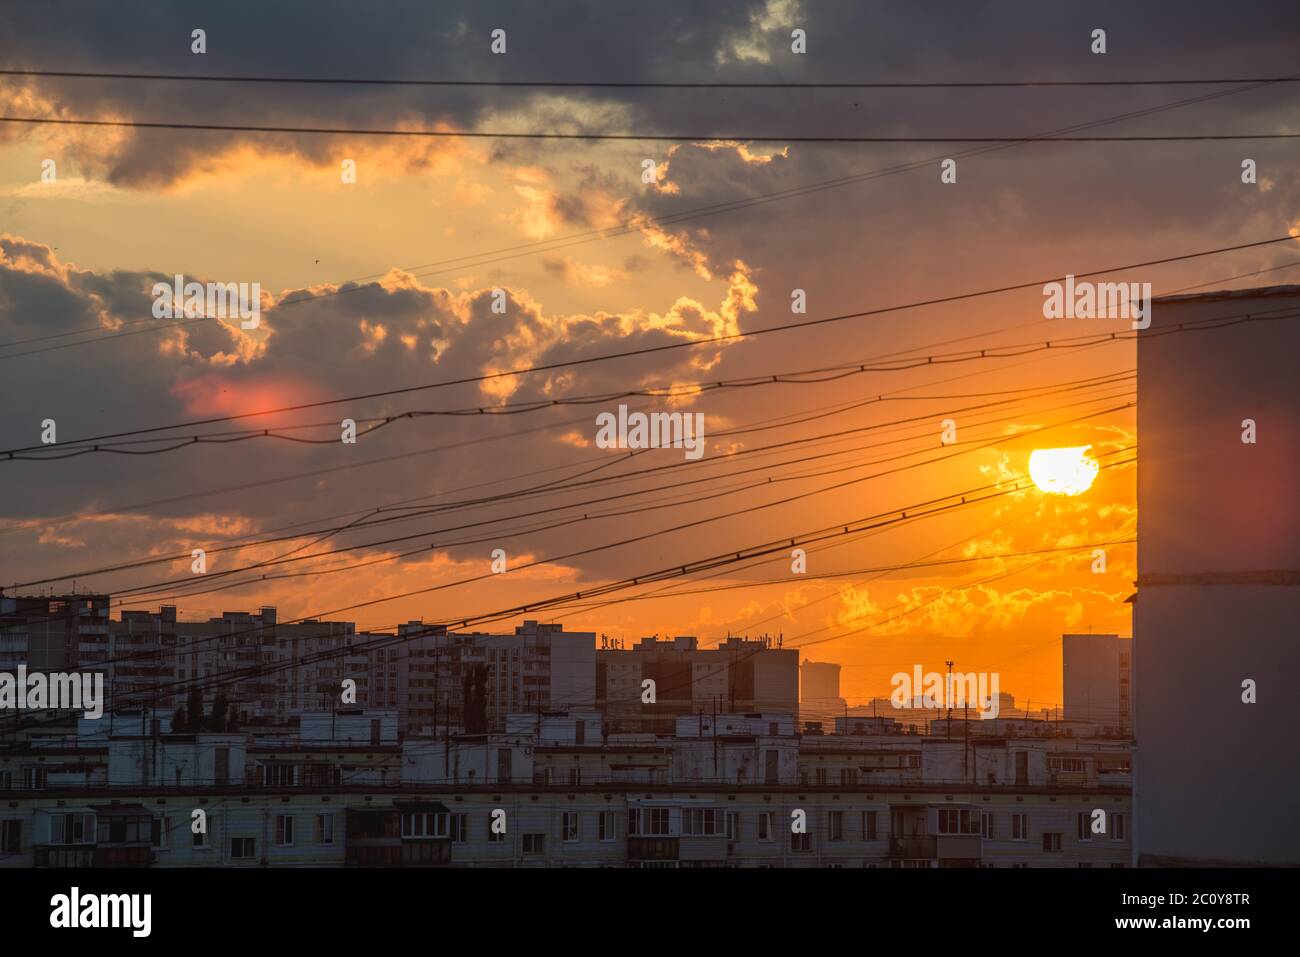 Sunset sunrise in the city. Warm scene Stock Photo